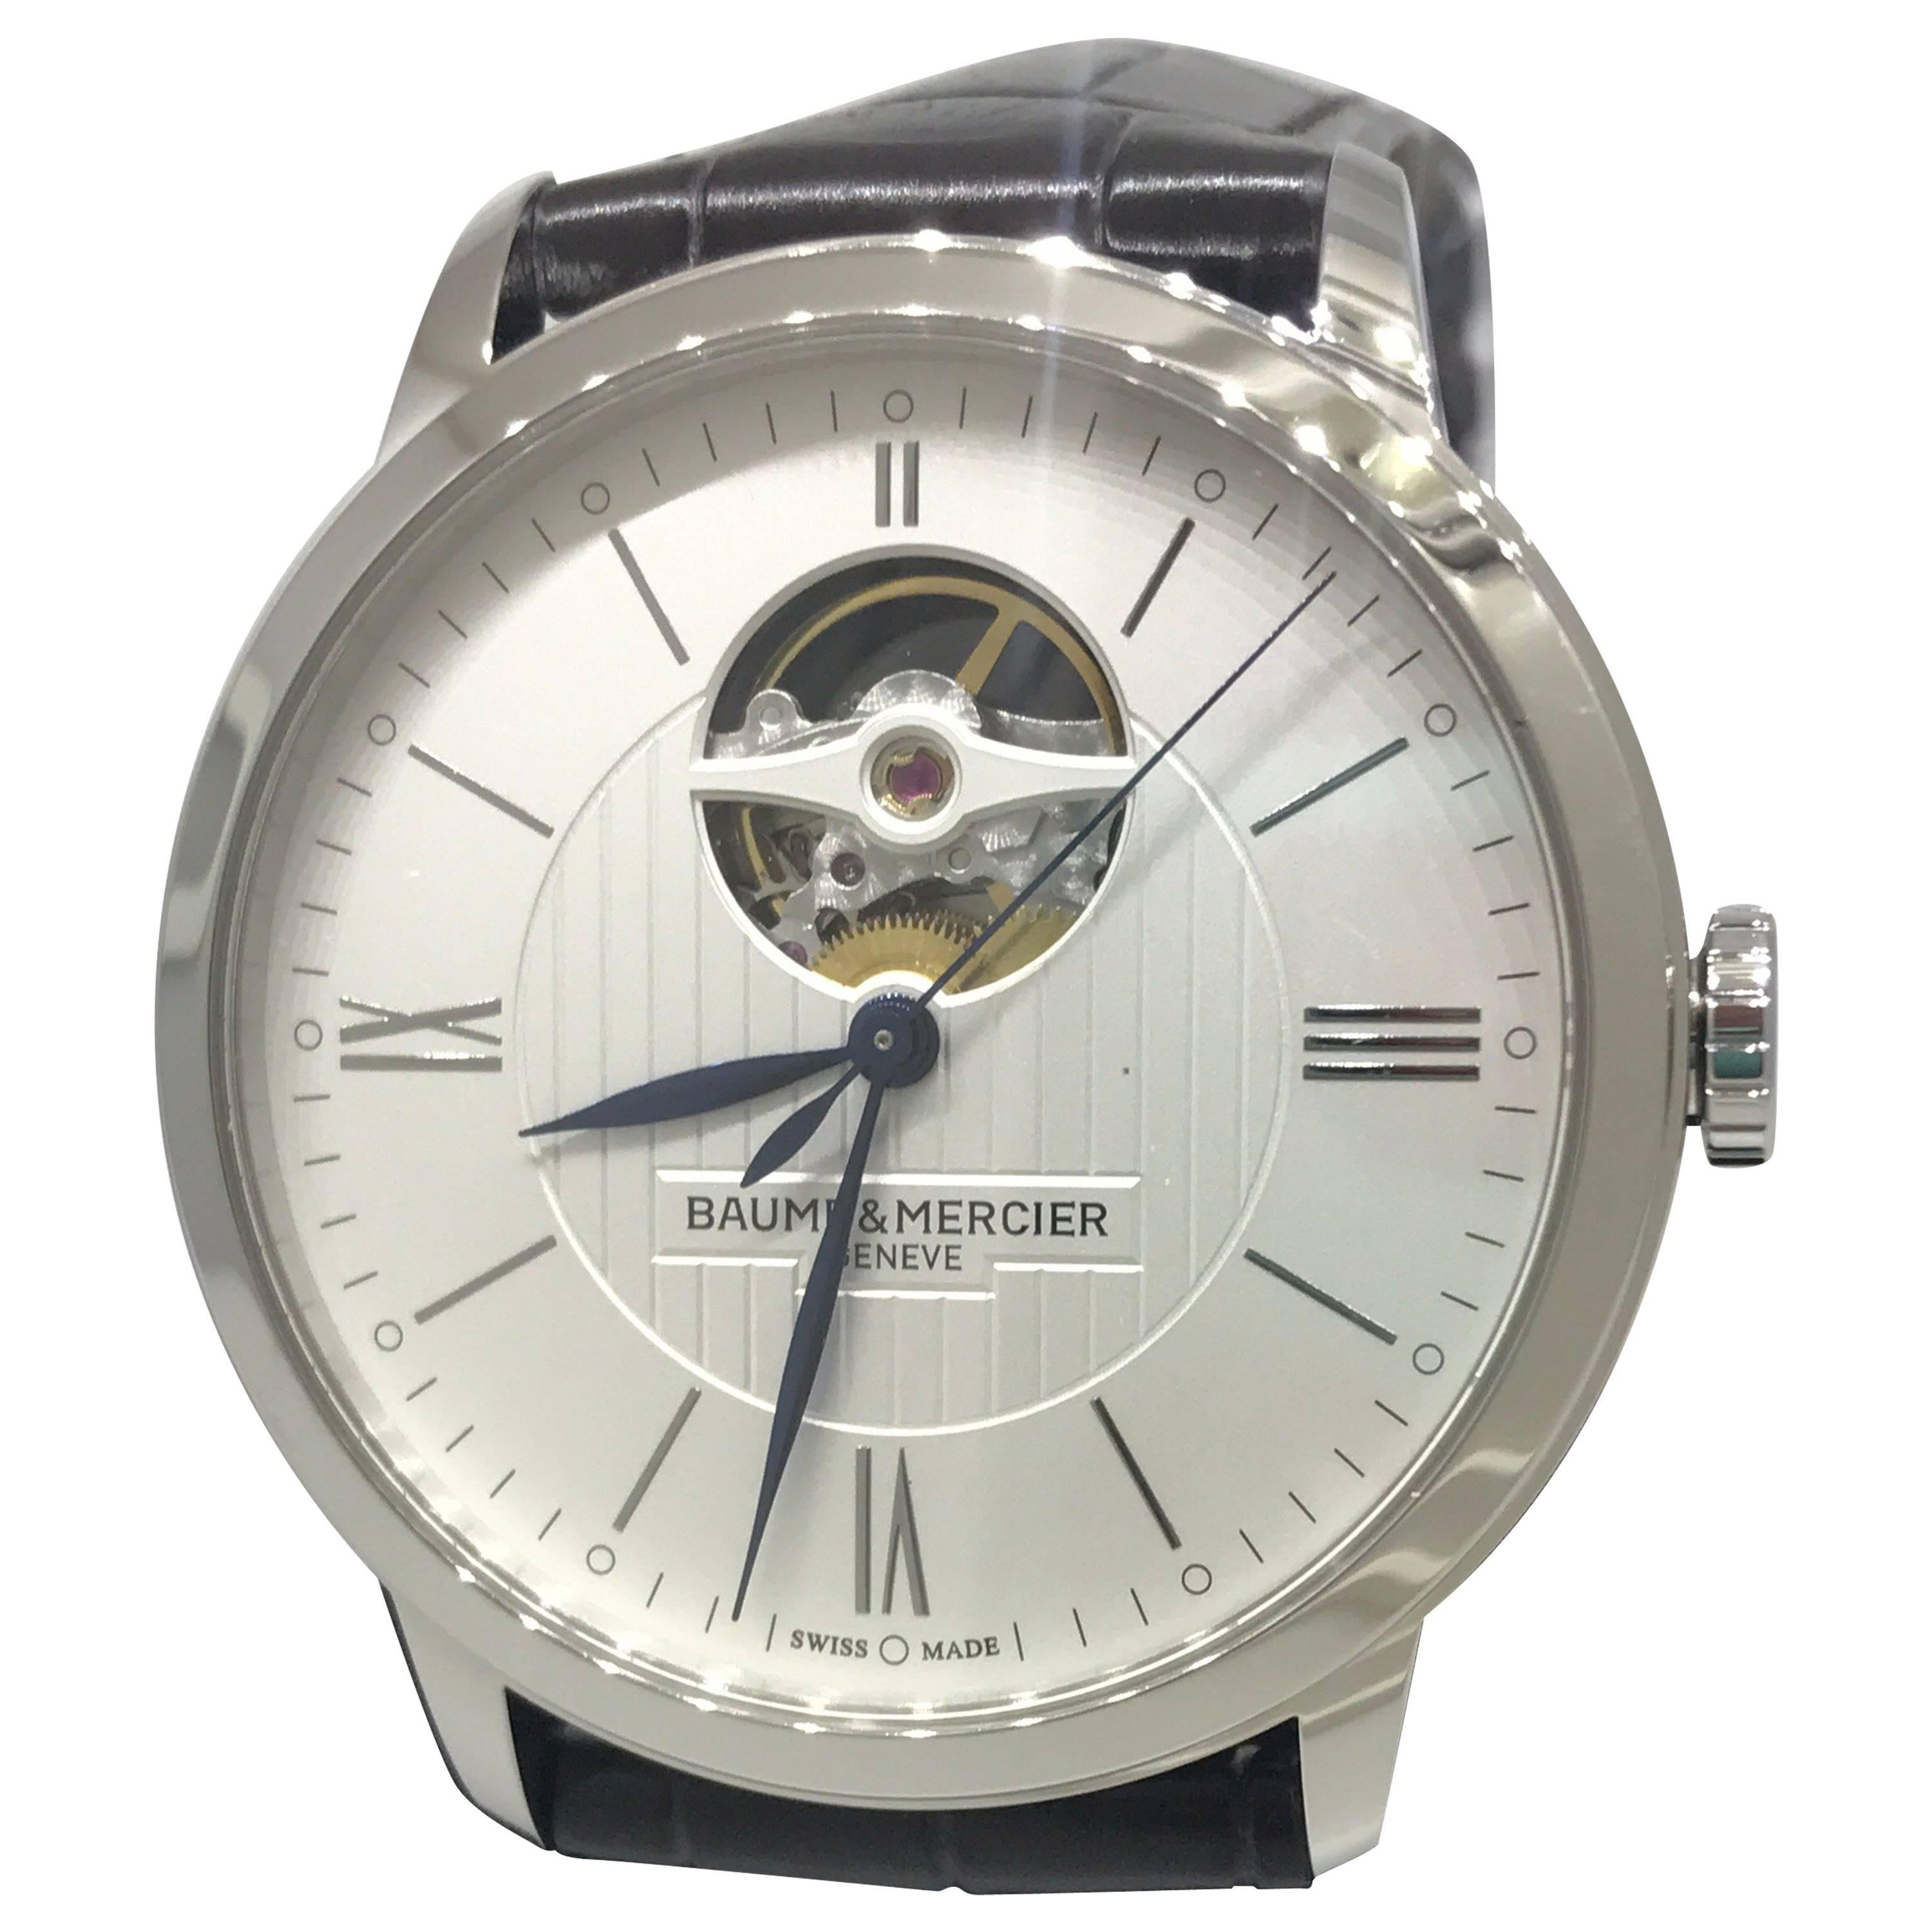 Baume & Mercier Classima Core Automatic Leather Band Men's Watch M0A10274